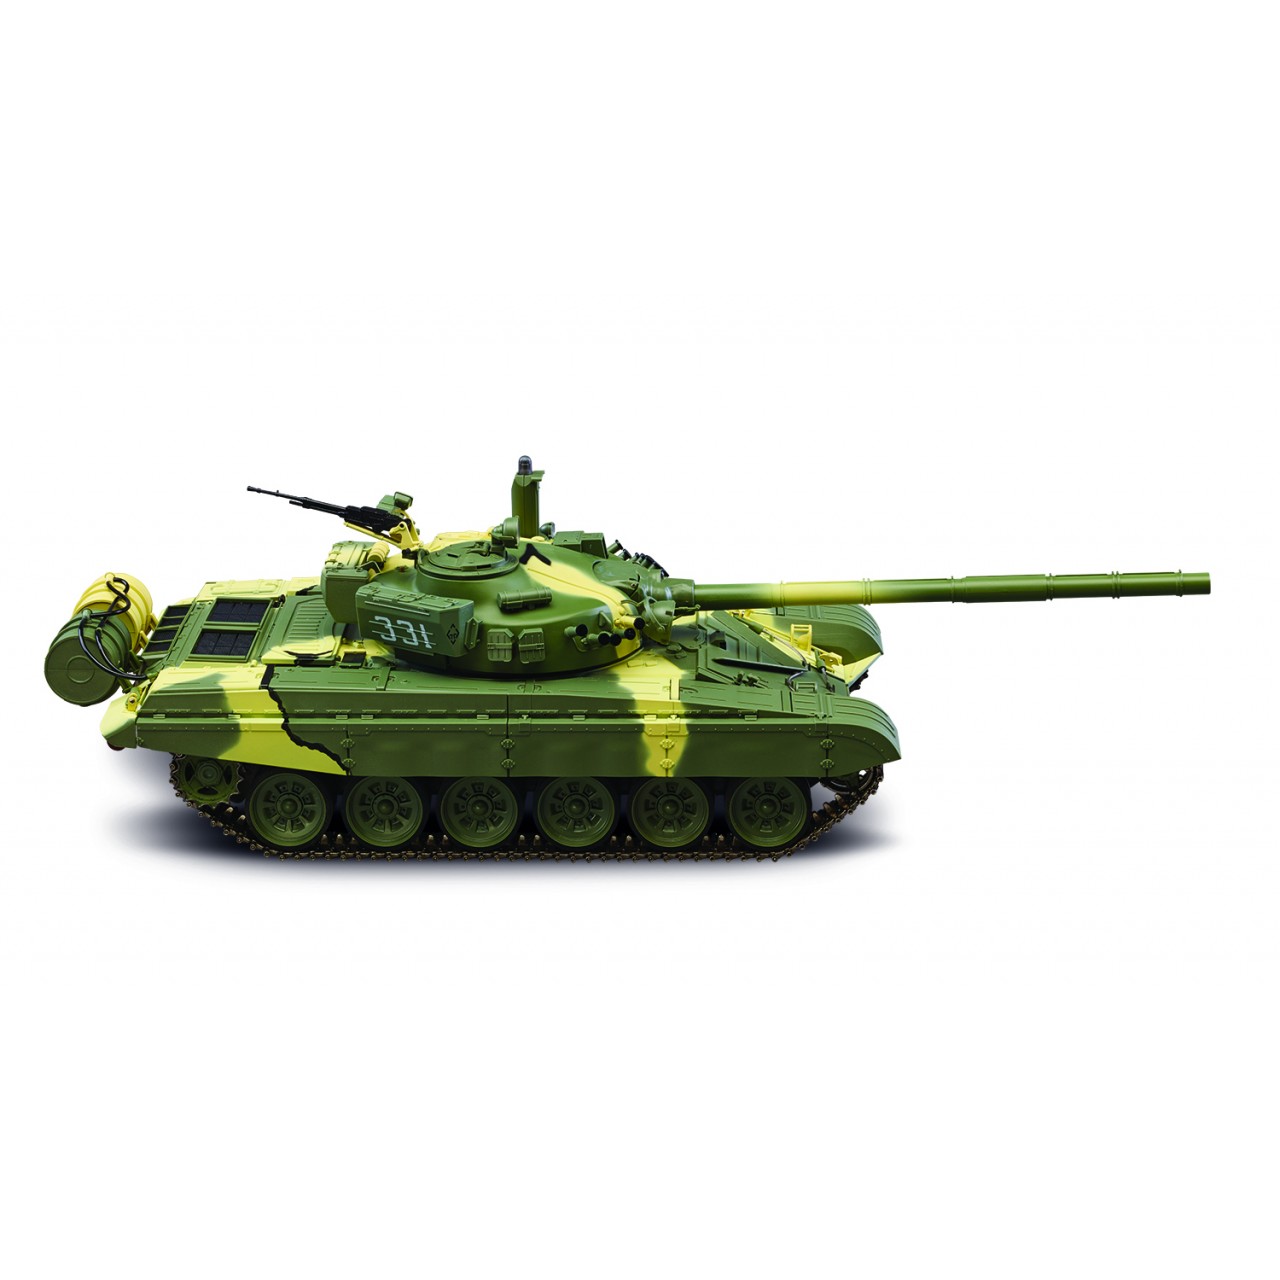 T 72 Russian Tank Full Kit 1 16 Military Model De Agostini Model